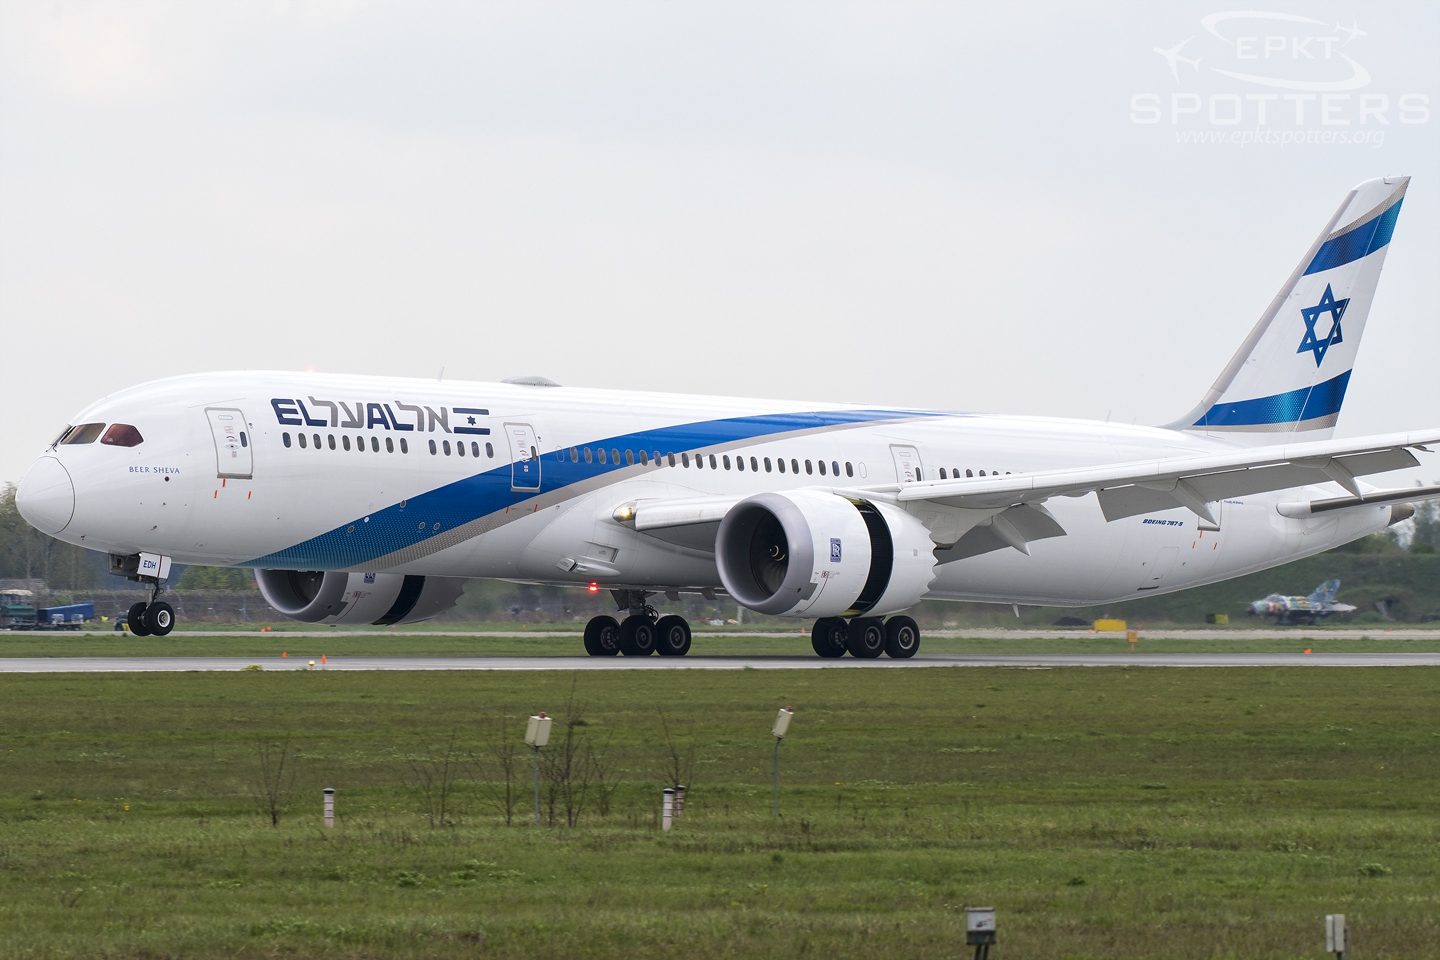 4X-EDH - Boeing 787 -9 Dreamliner (El Al Israel Airlines) / Pyrzowice - Katowice Poland [EPKT/KTW]